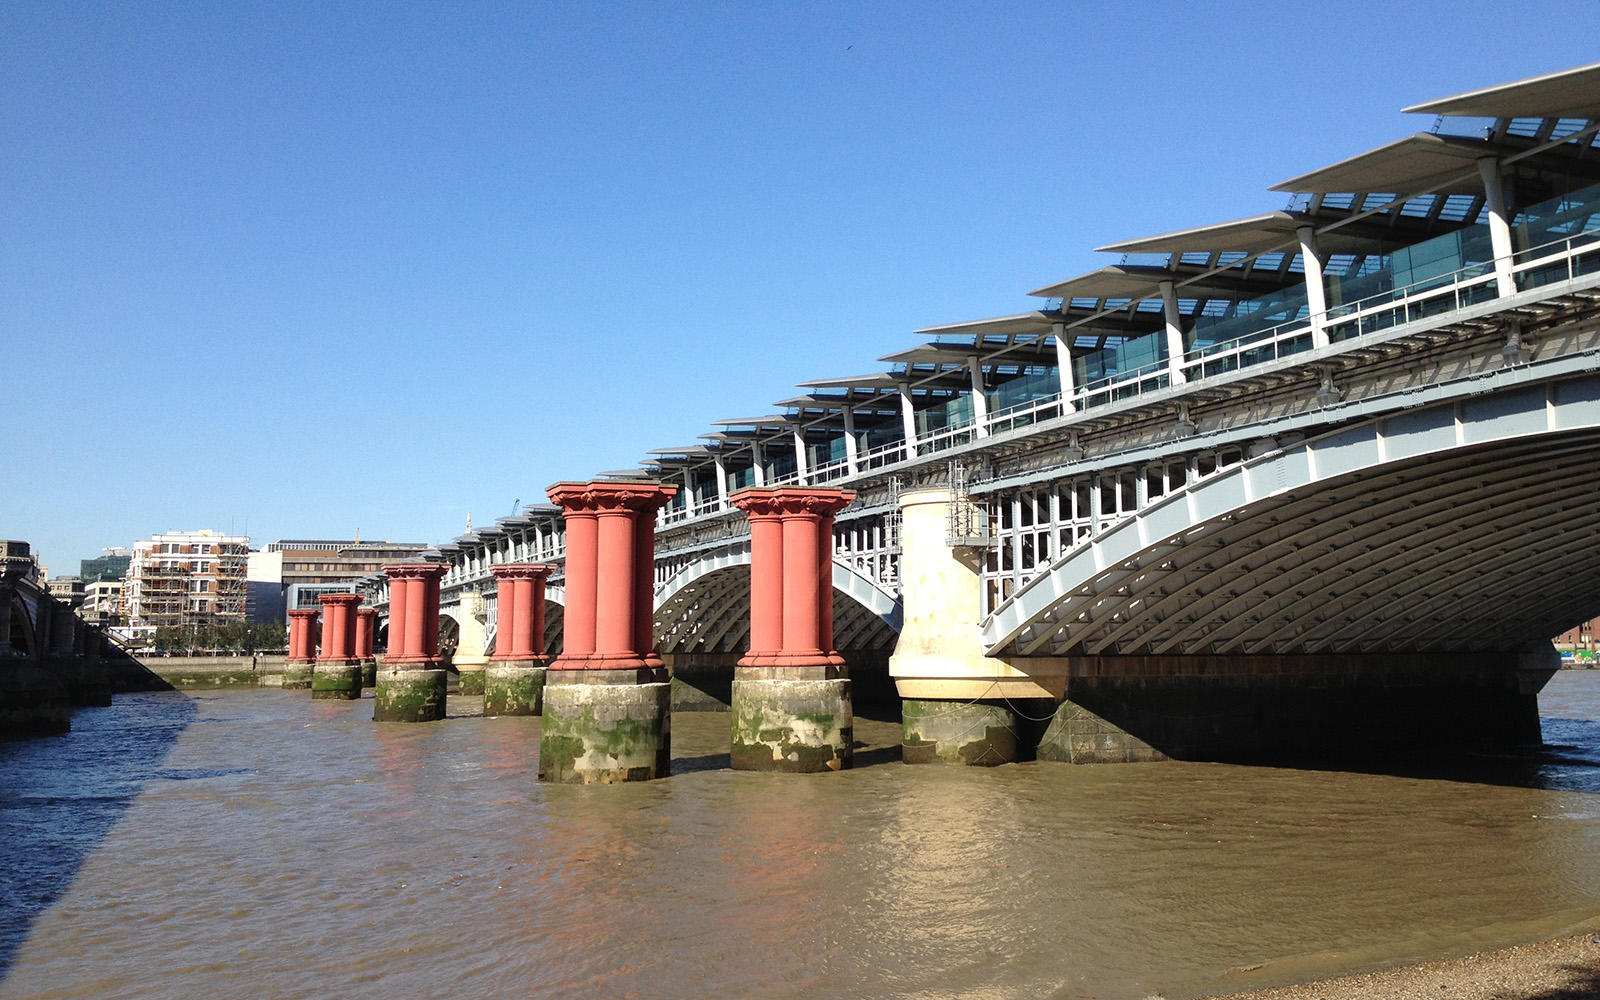 Blackfriars Bridge 10 September 2015